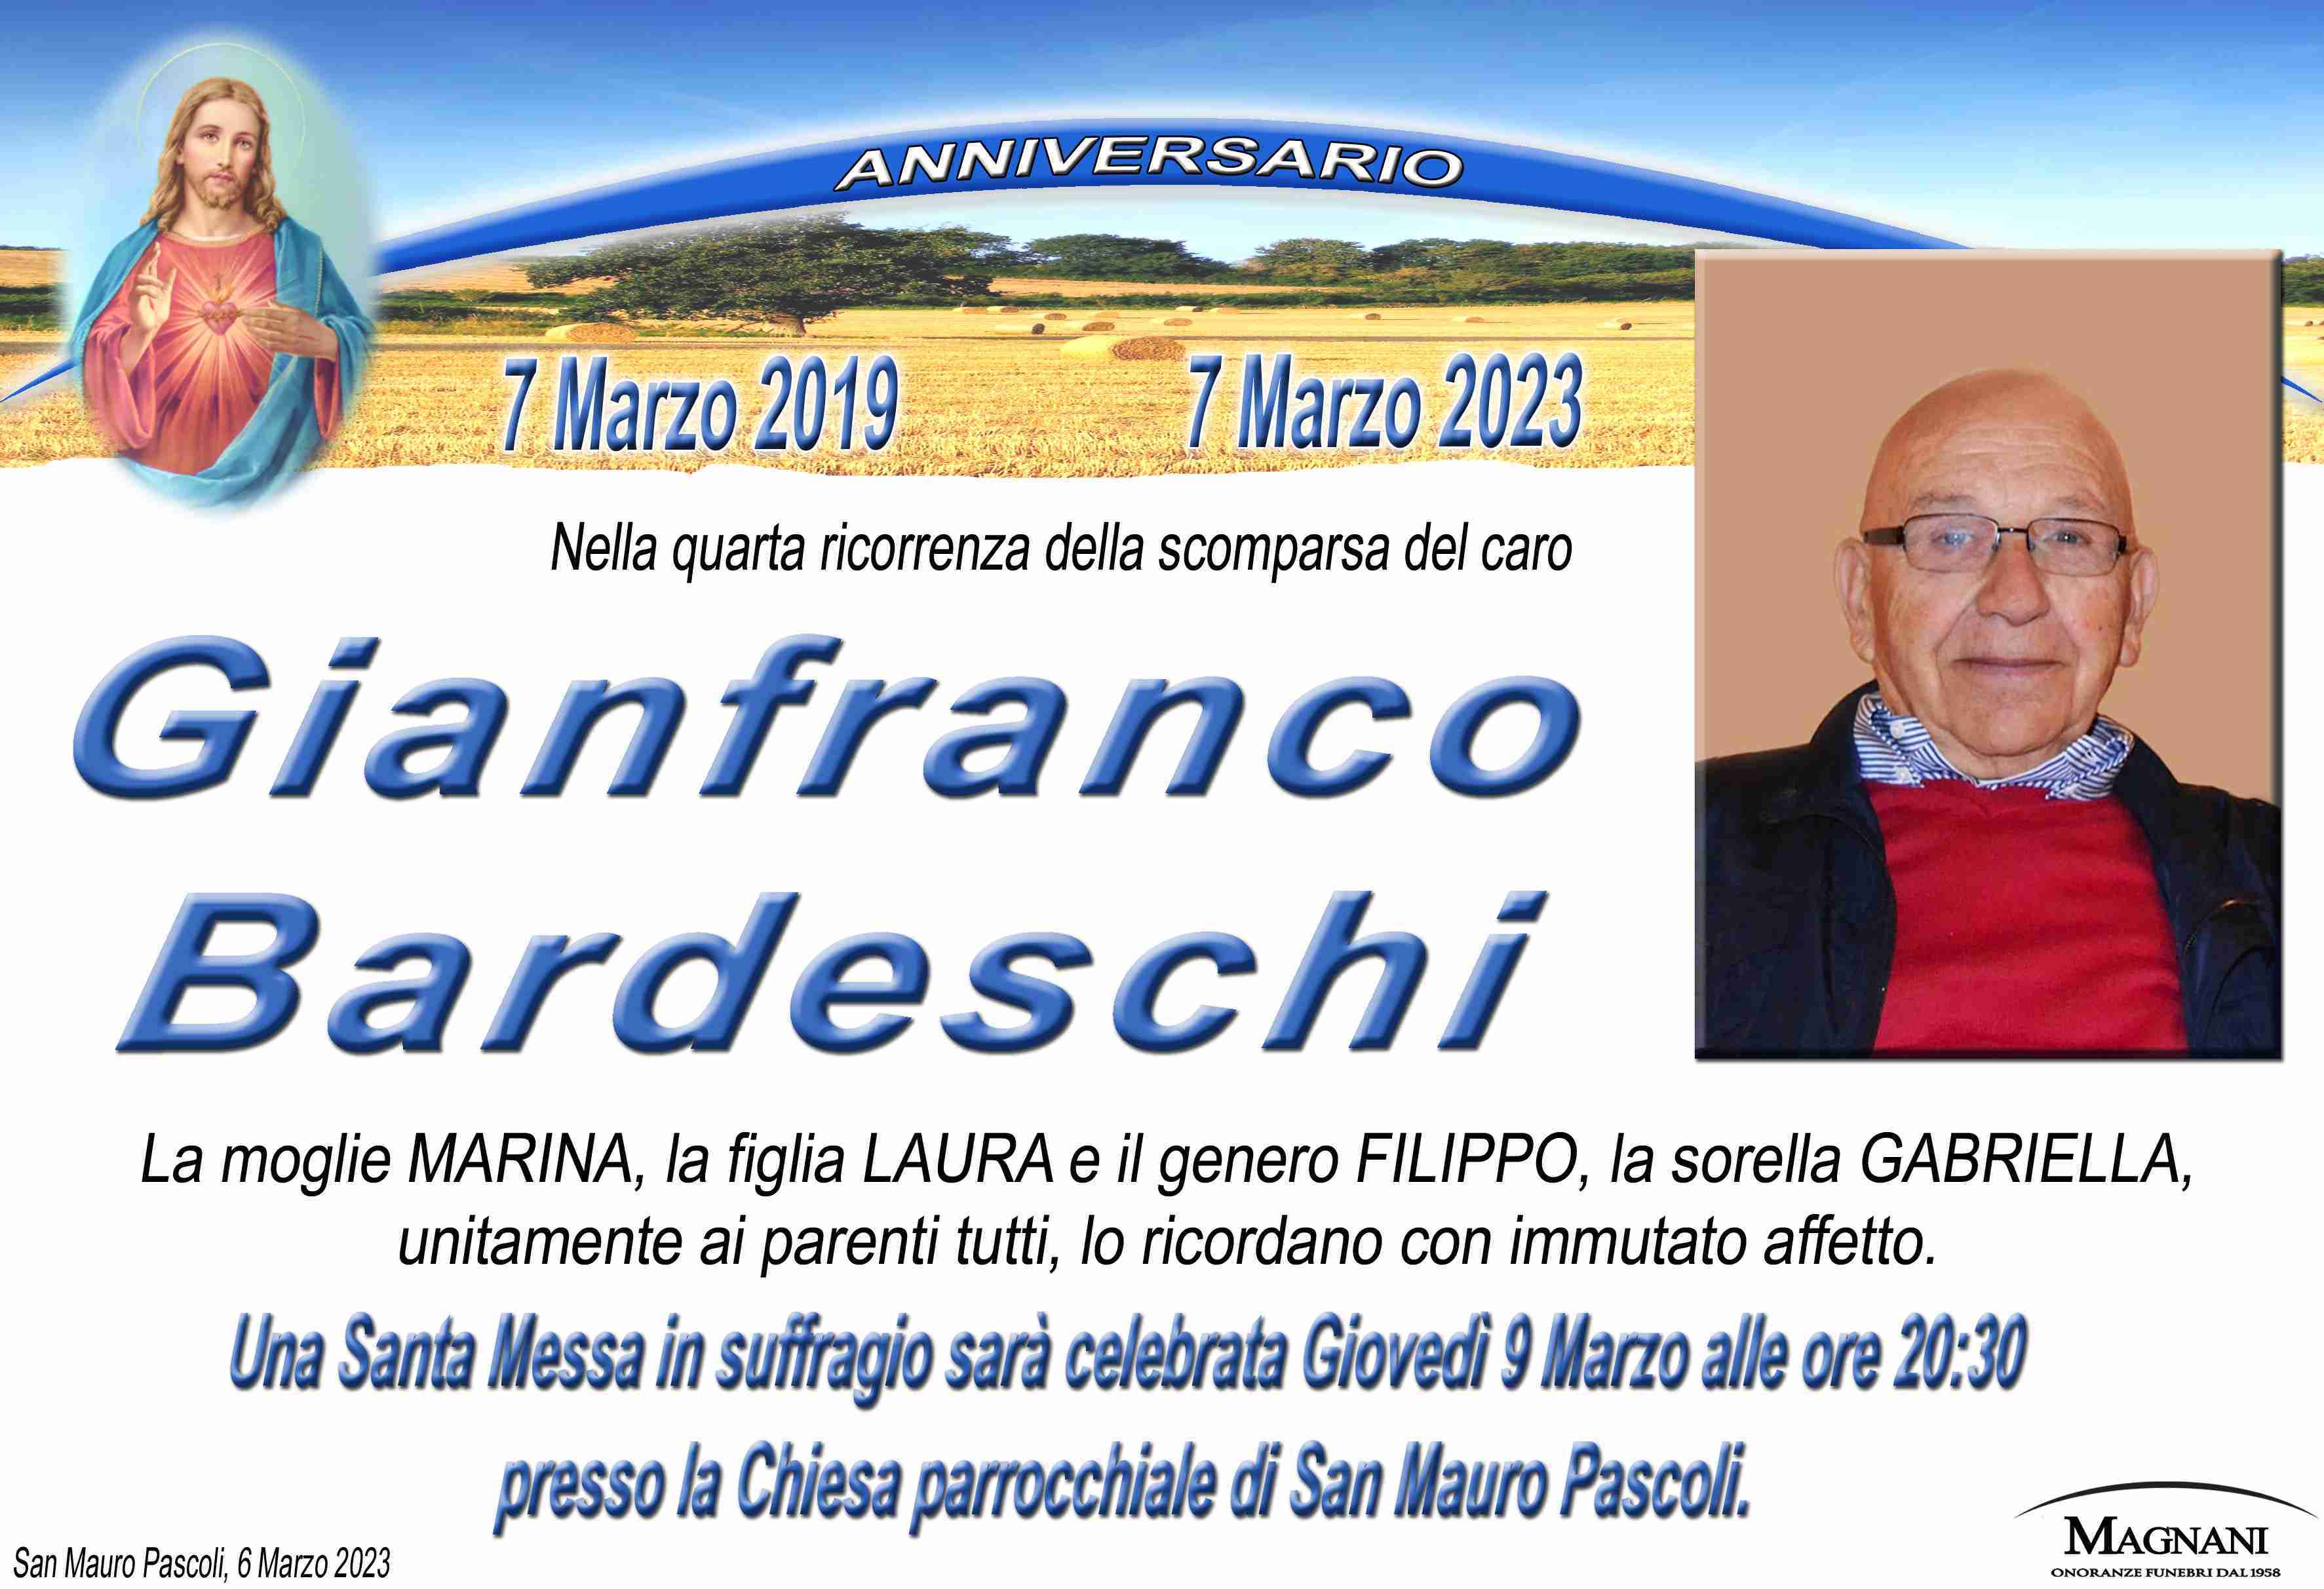 Bardeschi Gianfranco